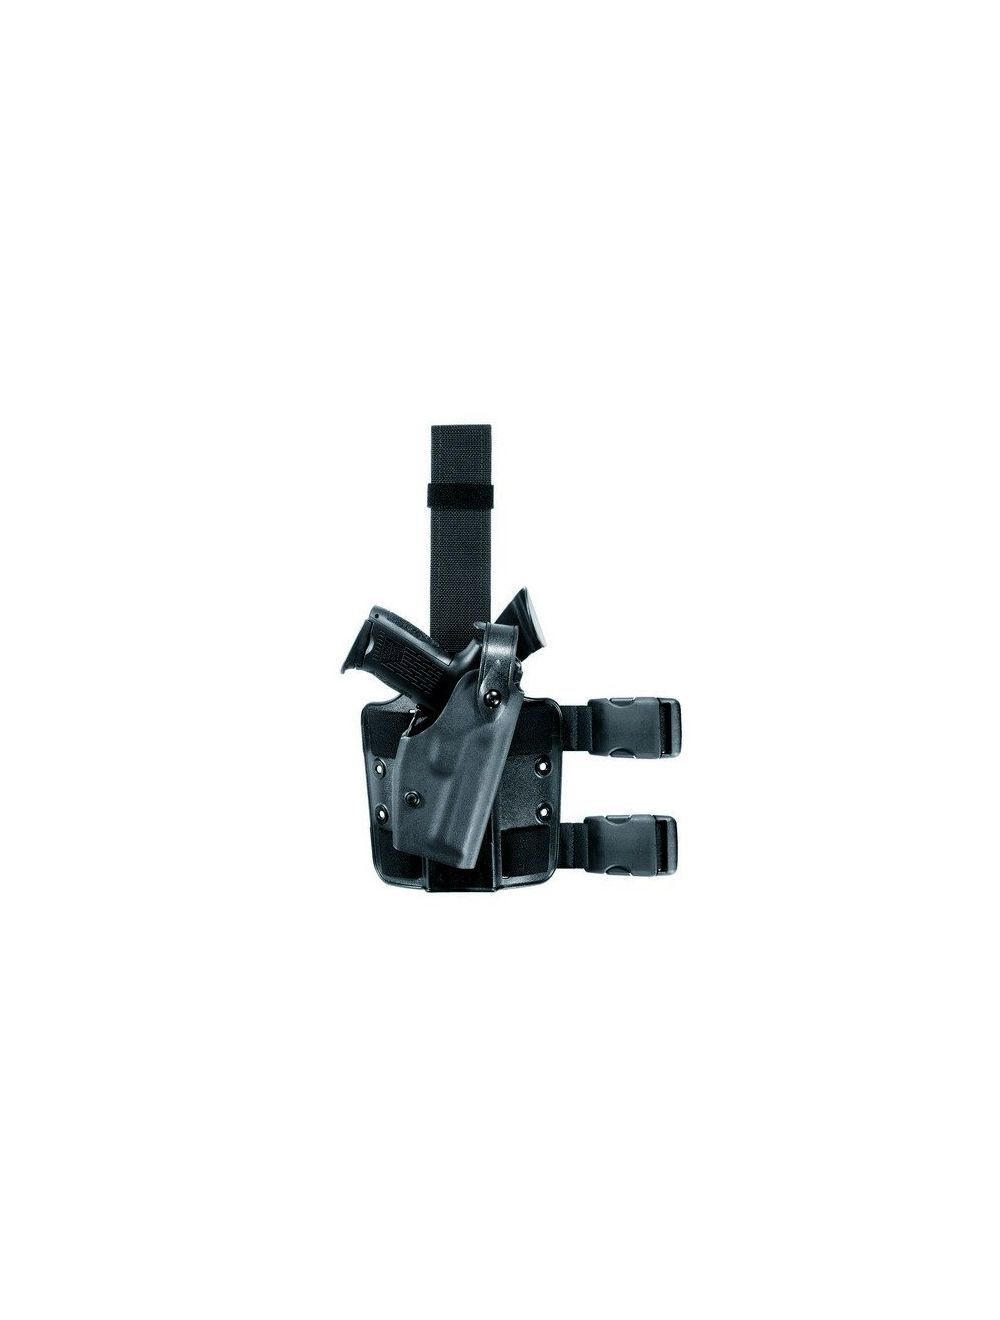 Model 6004 SLS Tactical Holster for Glock 22 w/ Streamlight TLR-2